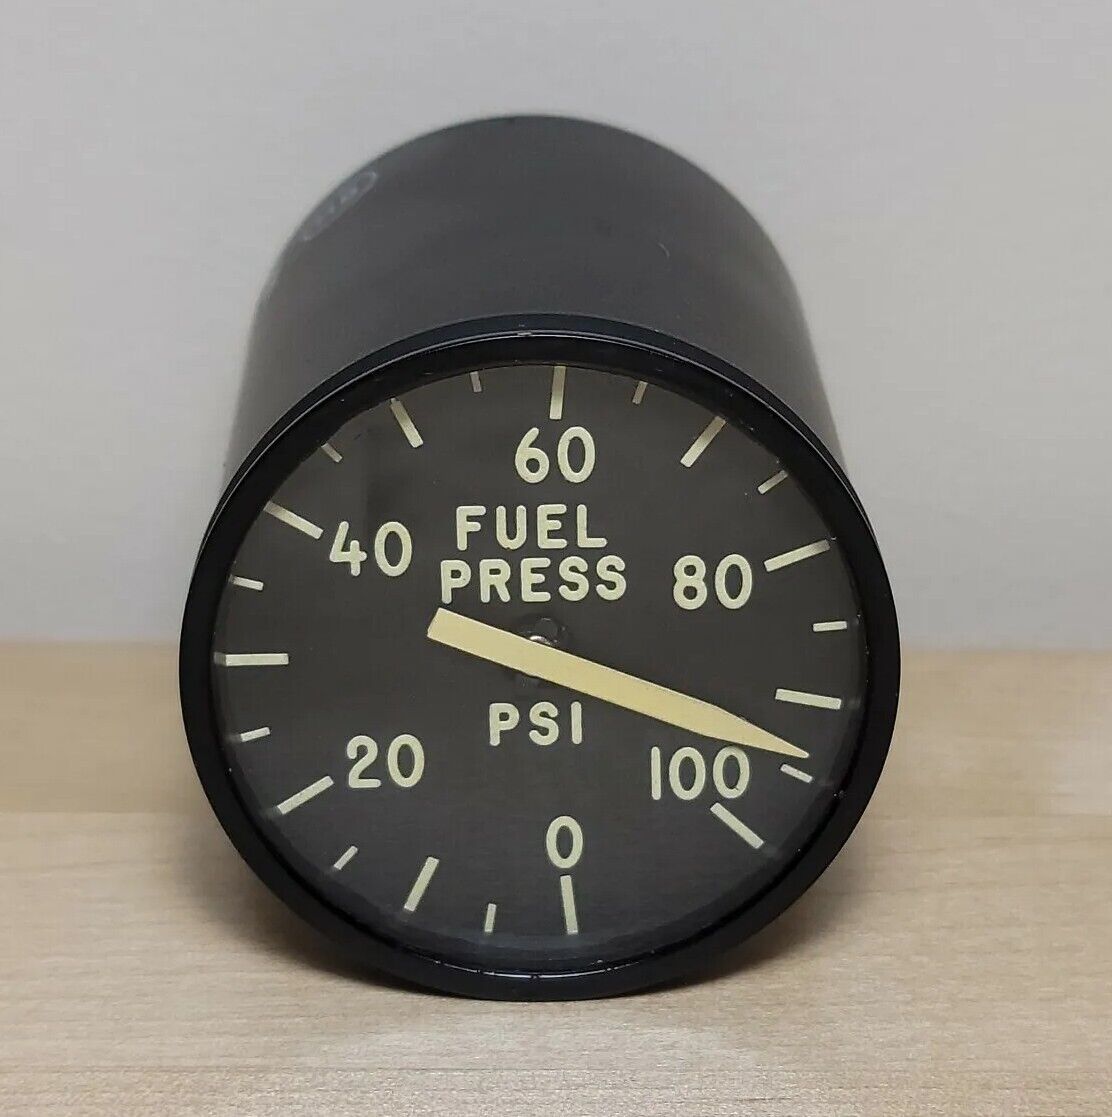 Fuel Pressure Indicator for Grumman C-2A Greyhound/F-18, Bendix MS28010